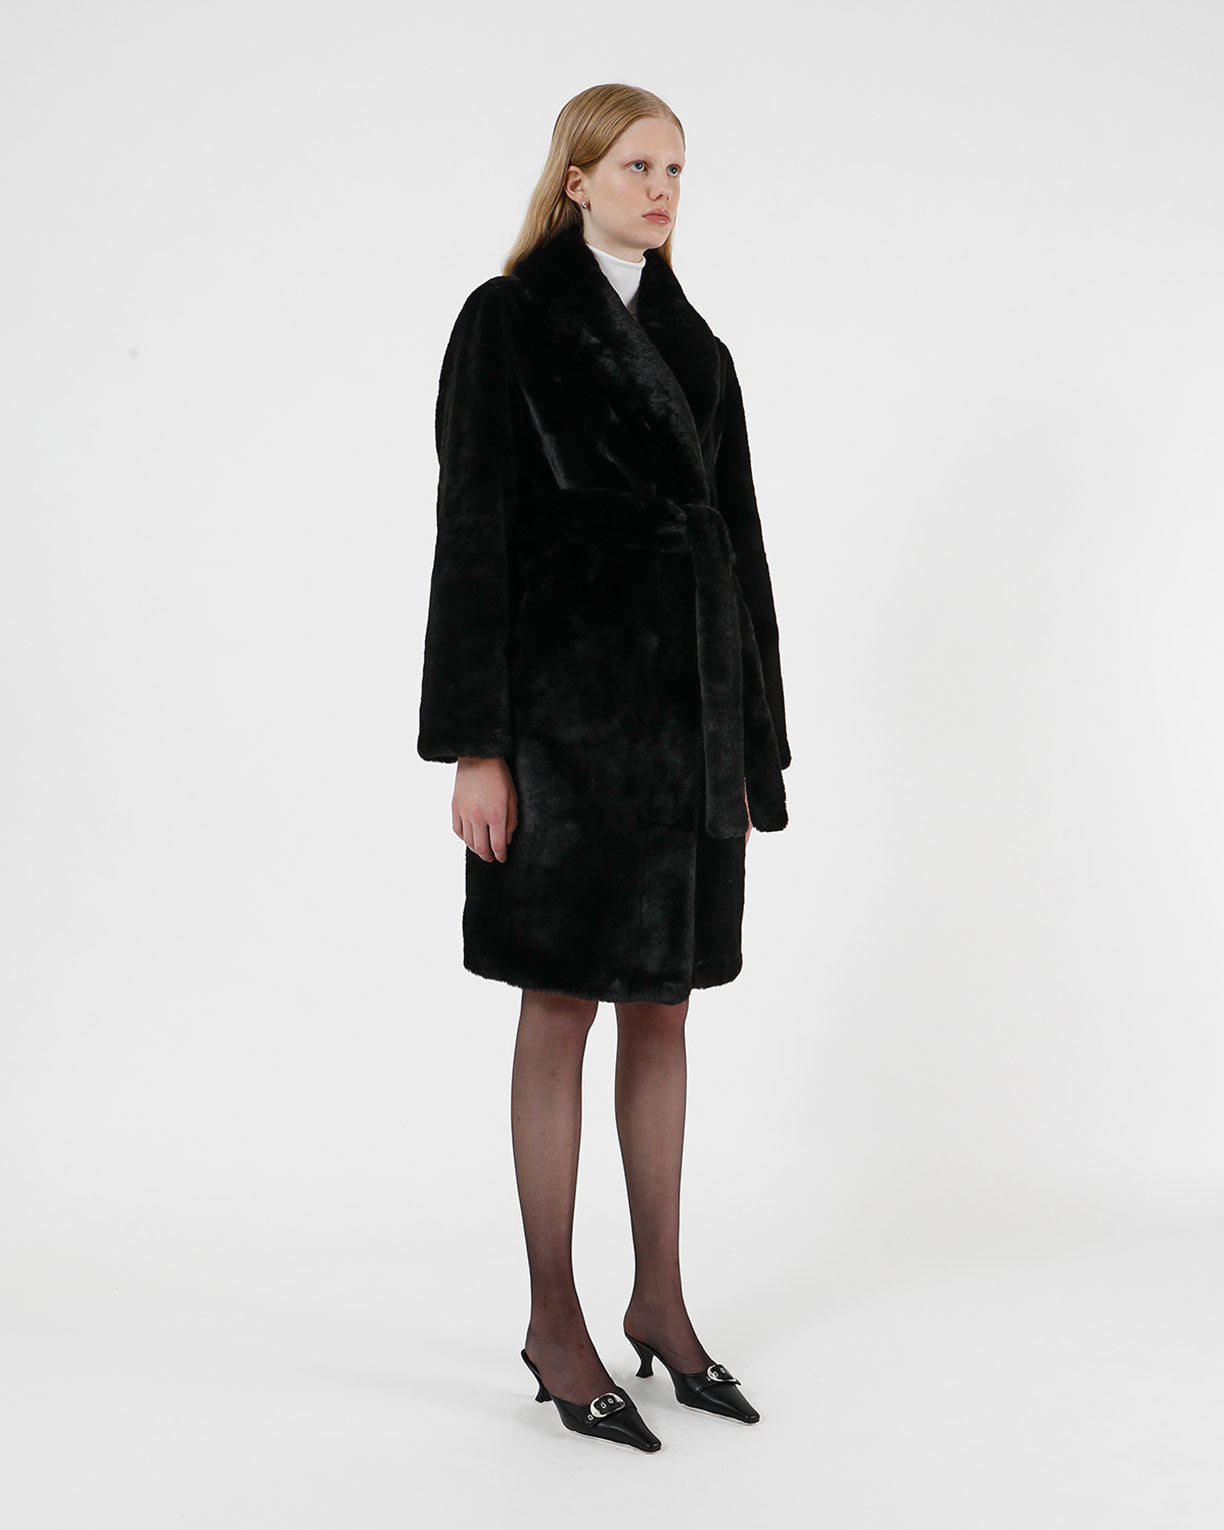 Zara January sale 2022: Best deals to shop on coats, dresses, bags